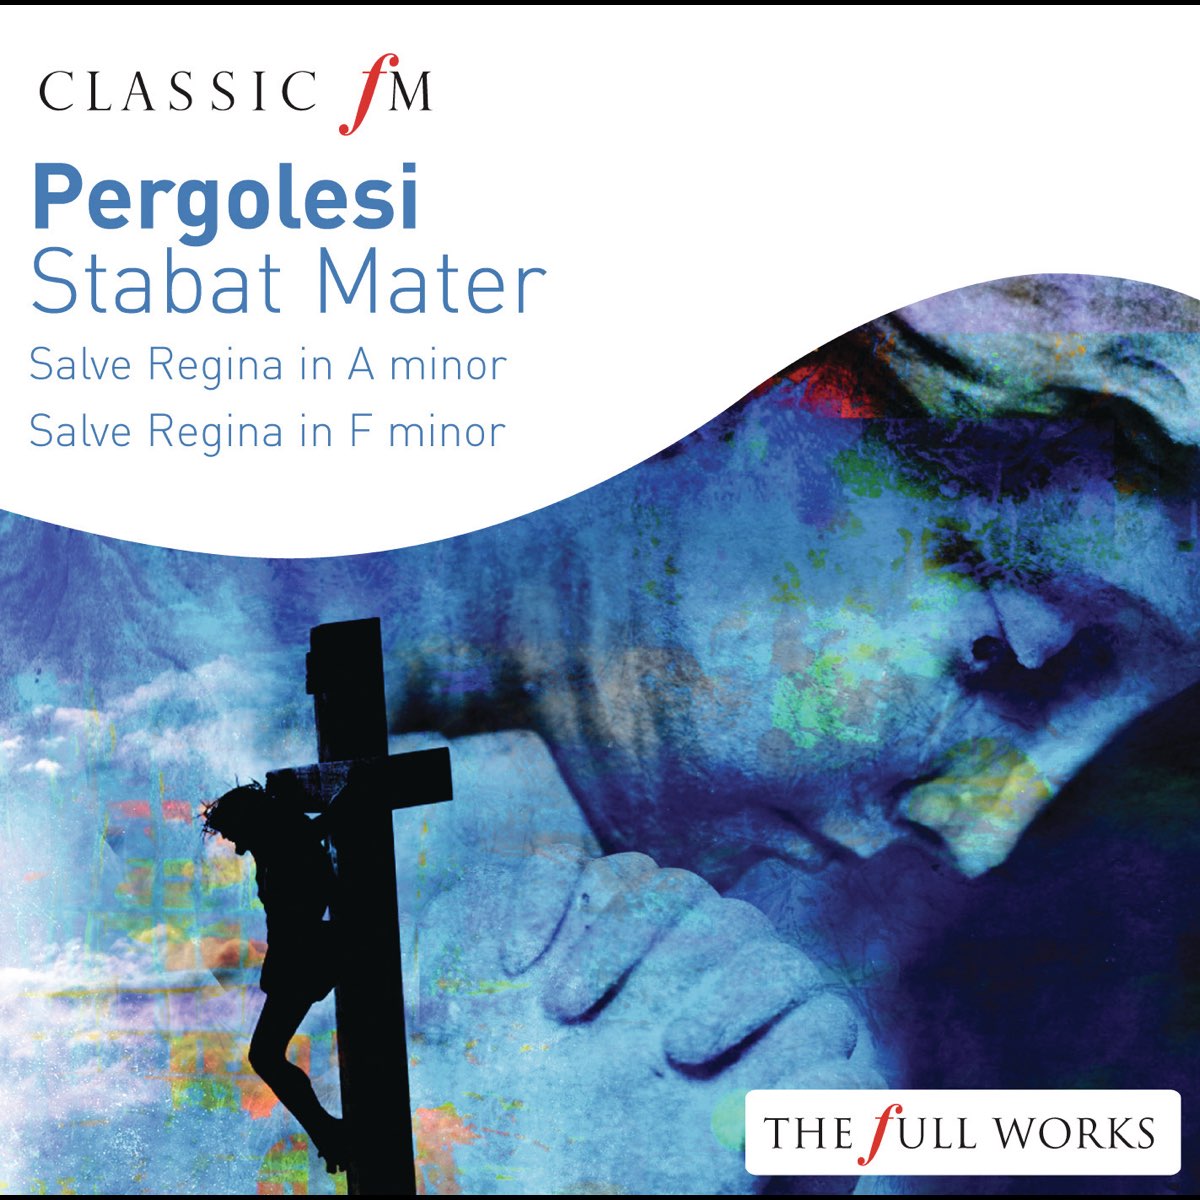 Pergolesi: Stabat Mater by Various Artists on Apple Music